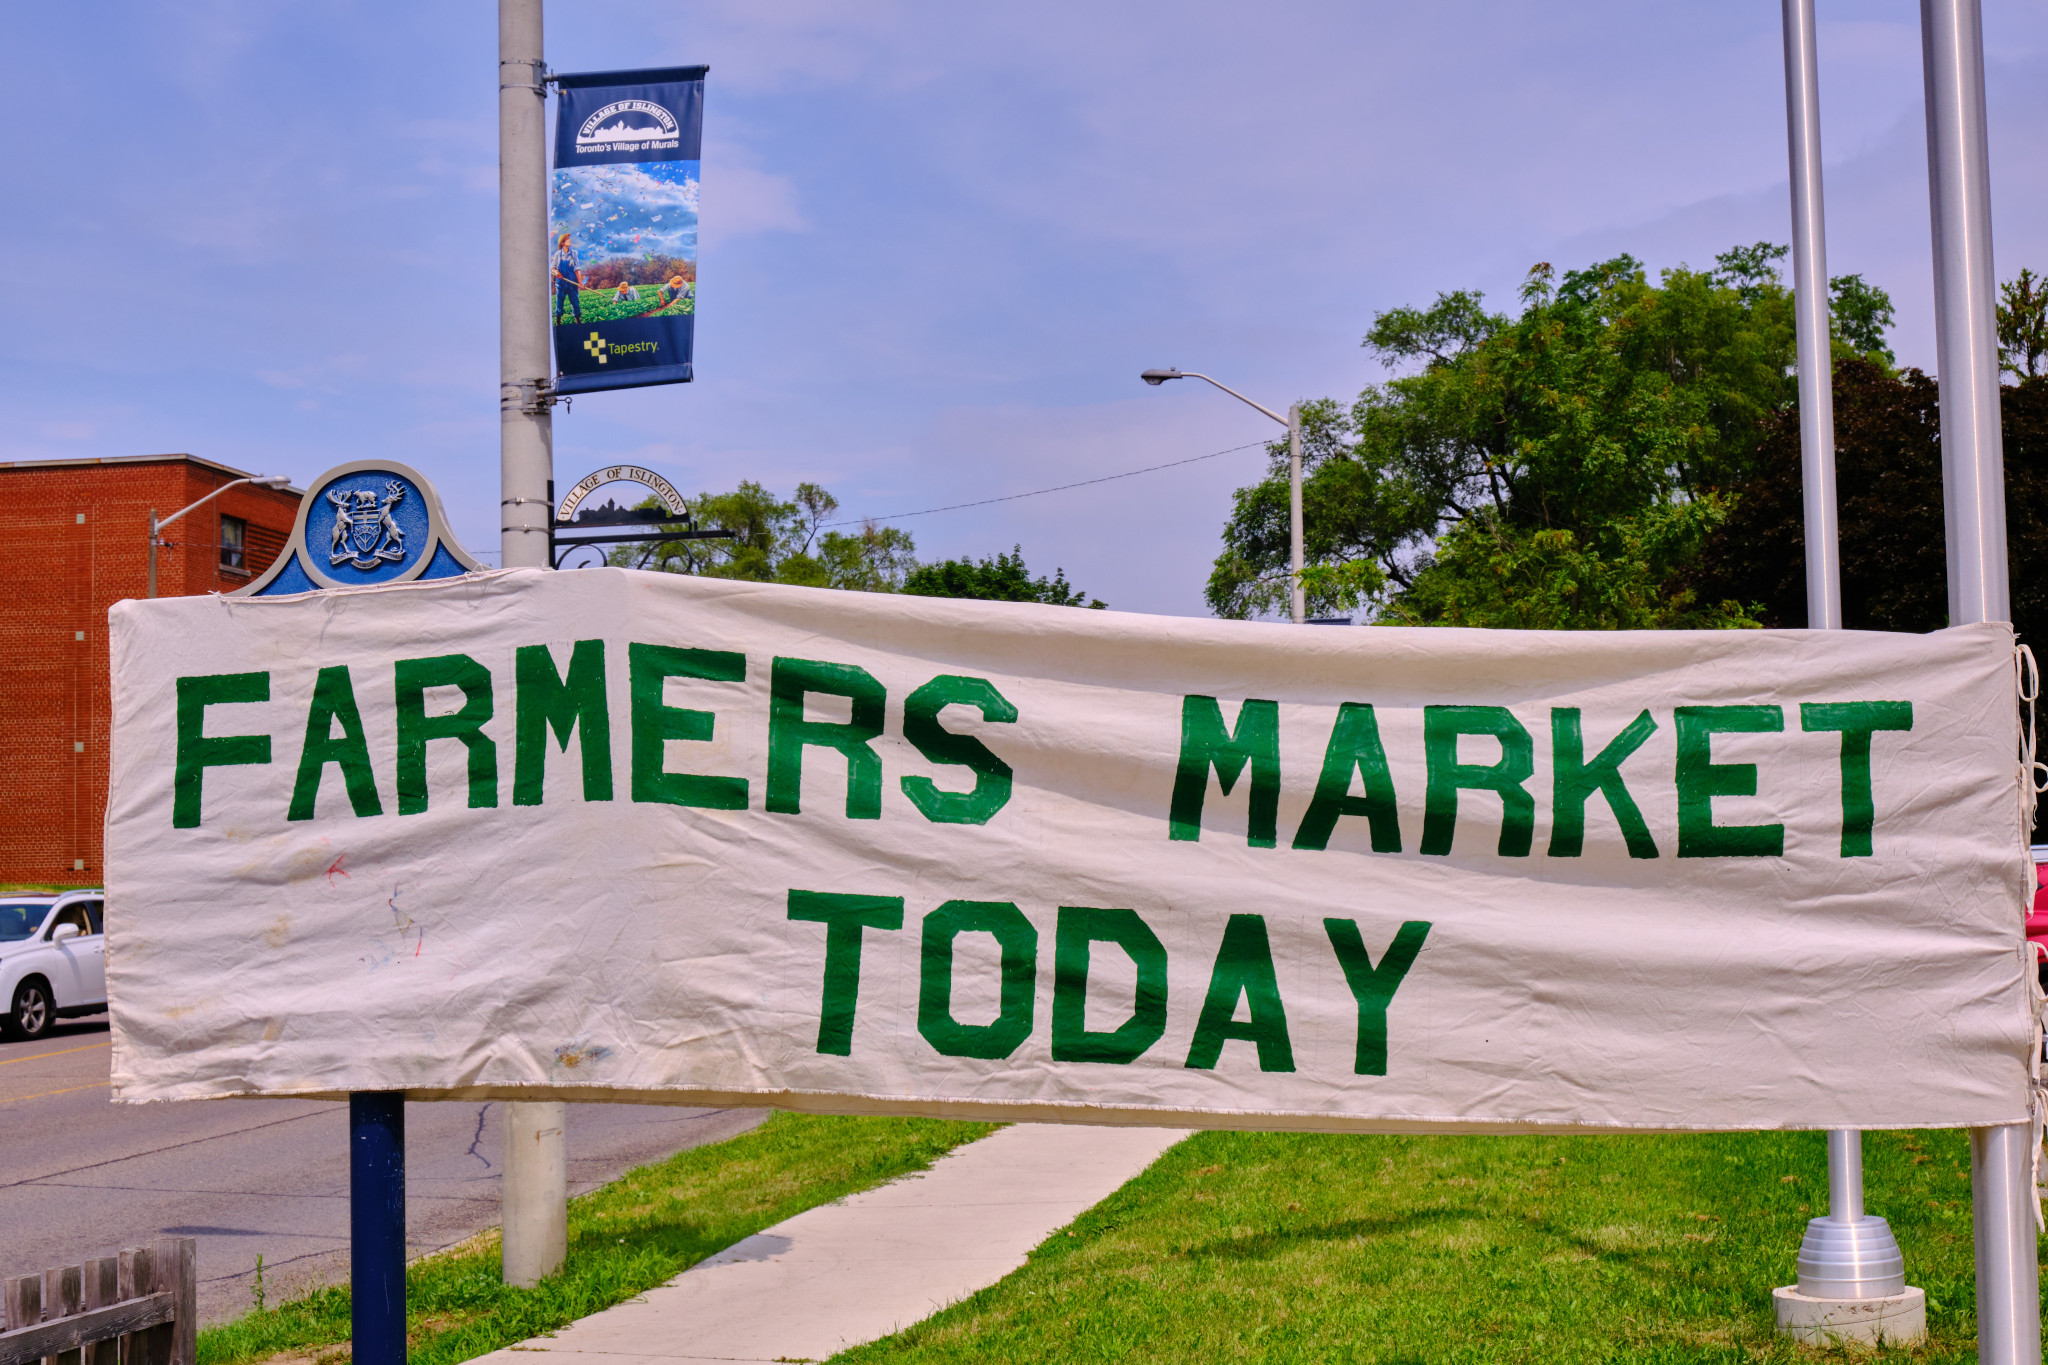 Become a Vendor at the Farmers’ Market — Deadline April 7